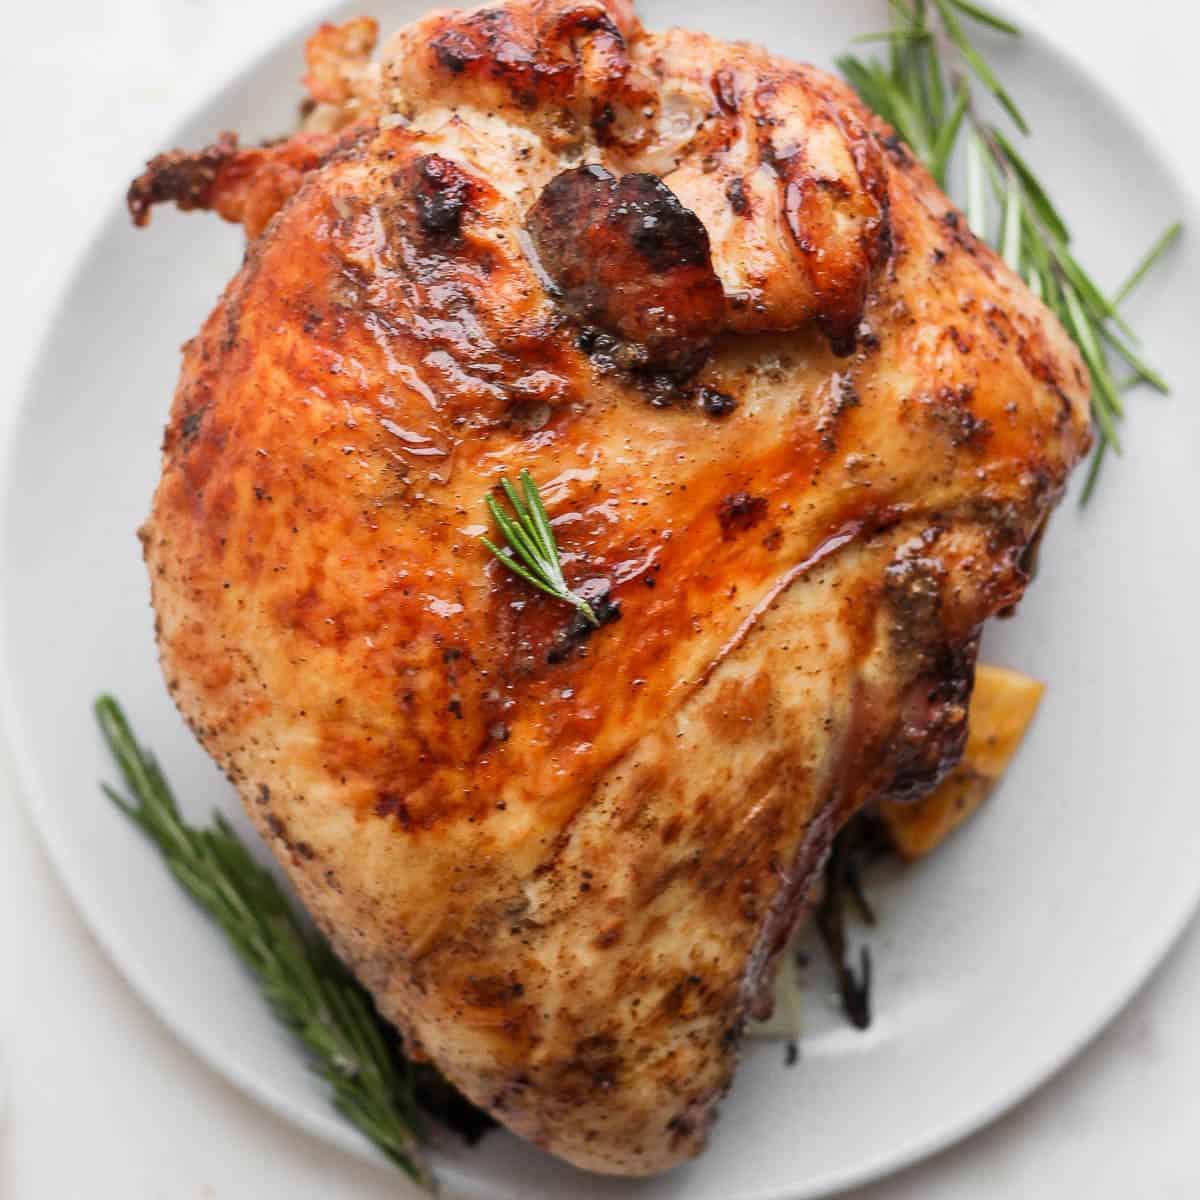 A grilled turkey breast recipe.